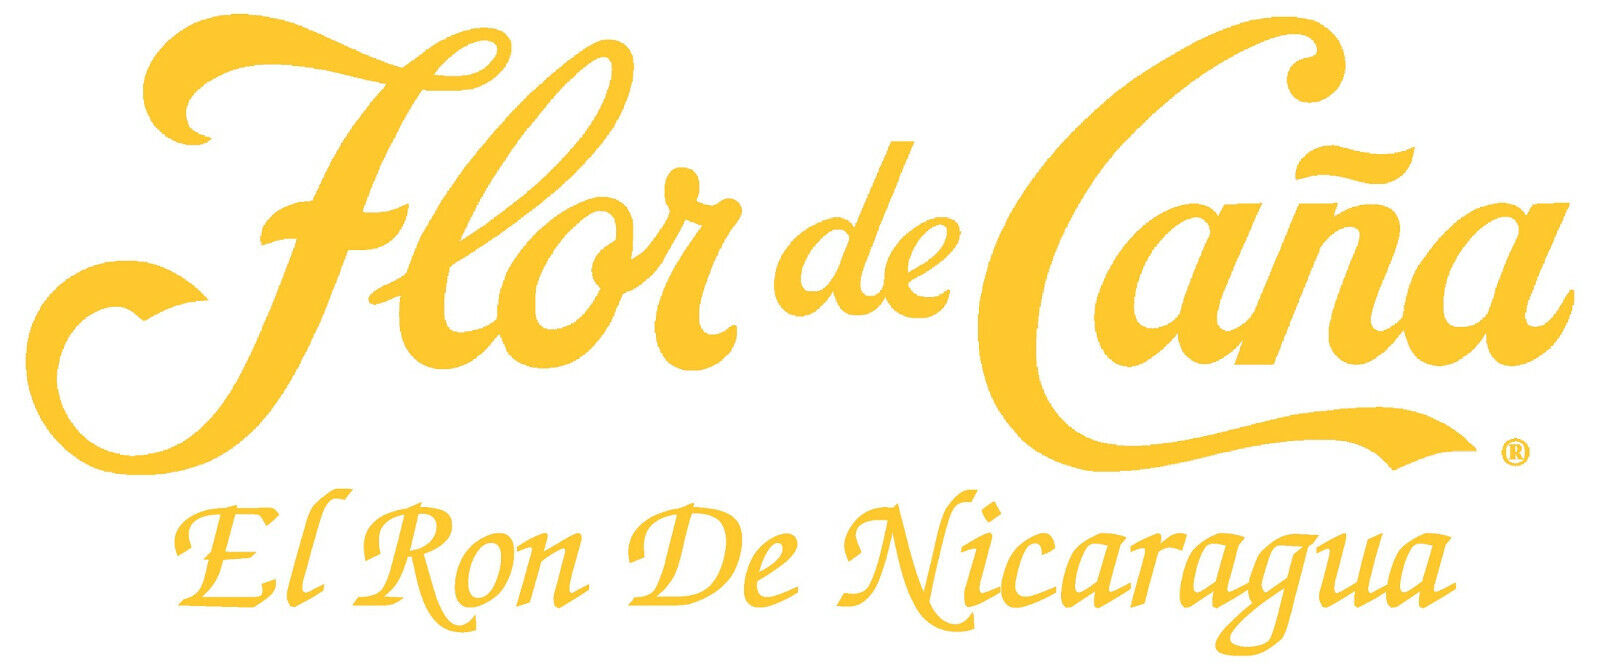 Flor de Caña Nicaragua sticker